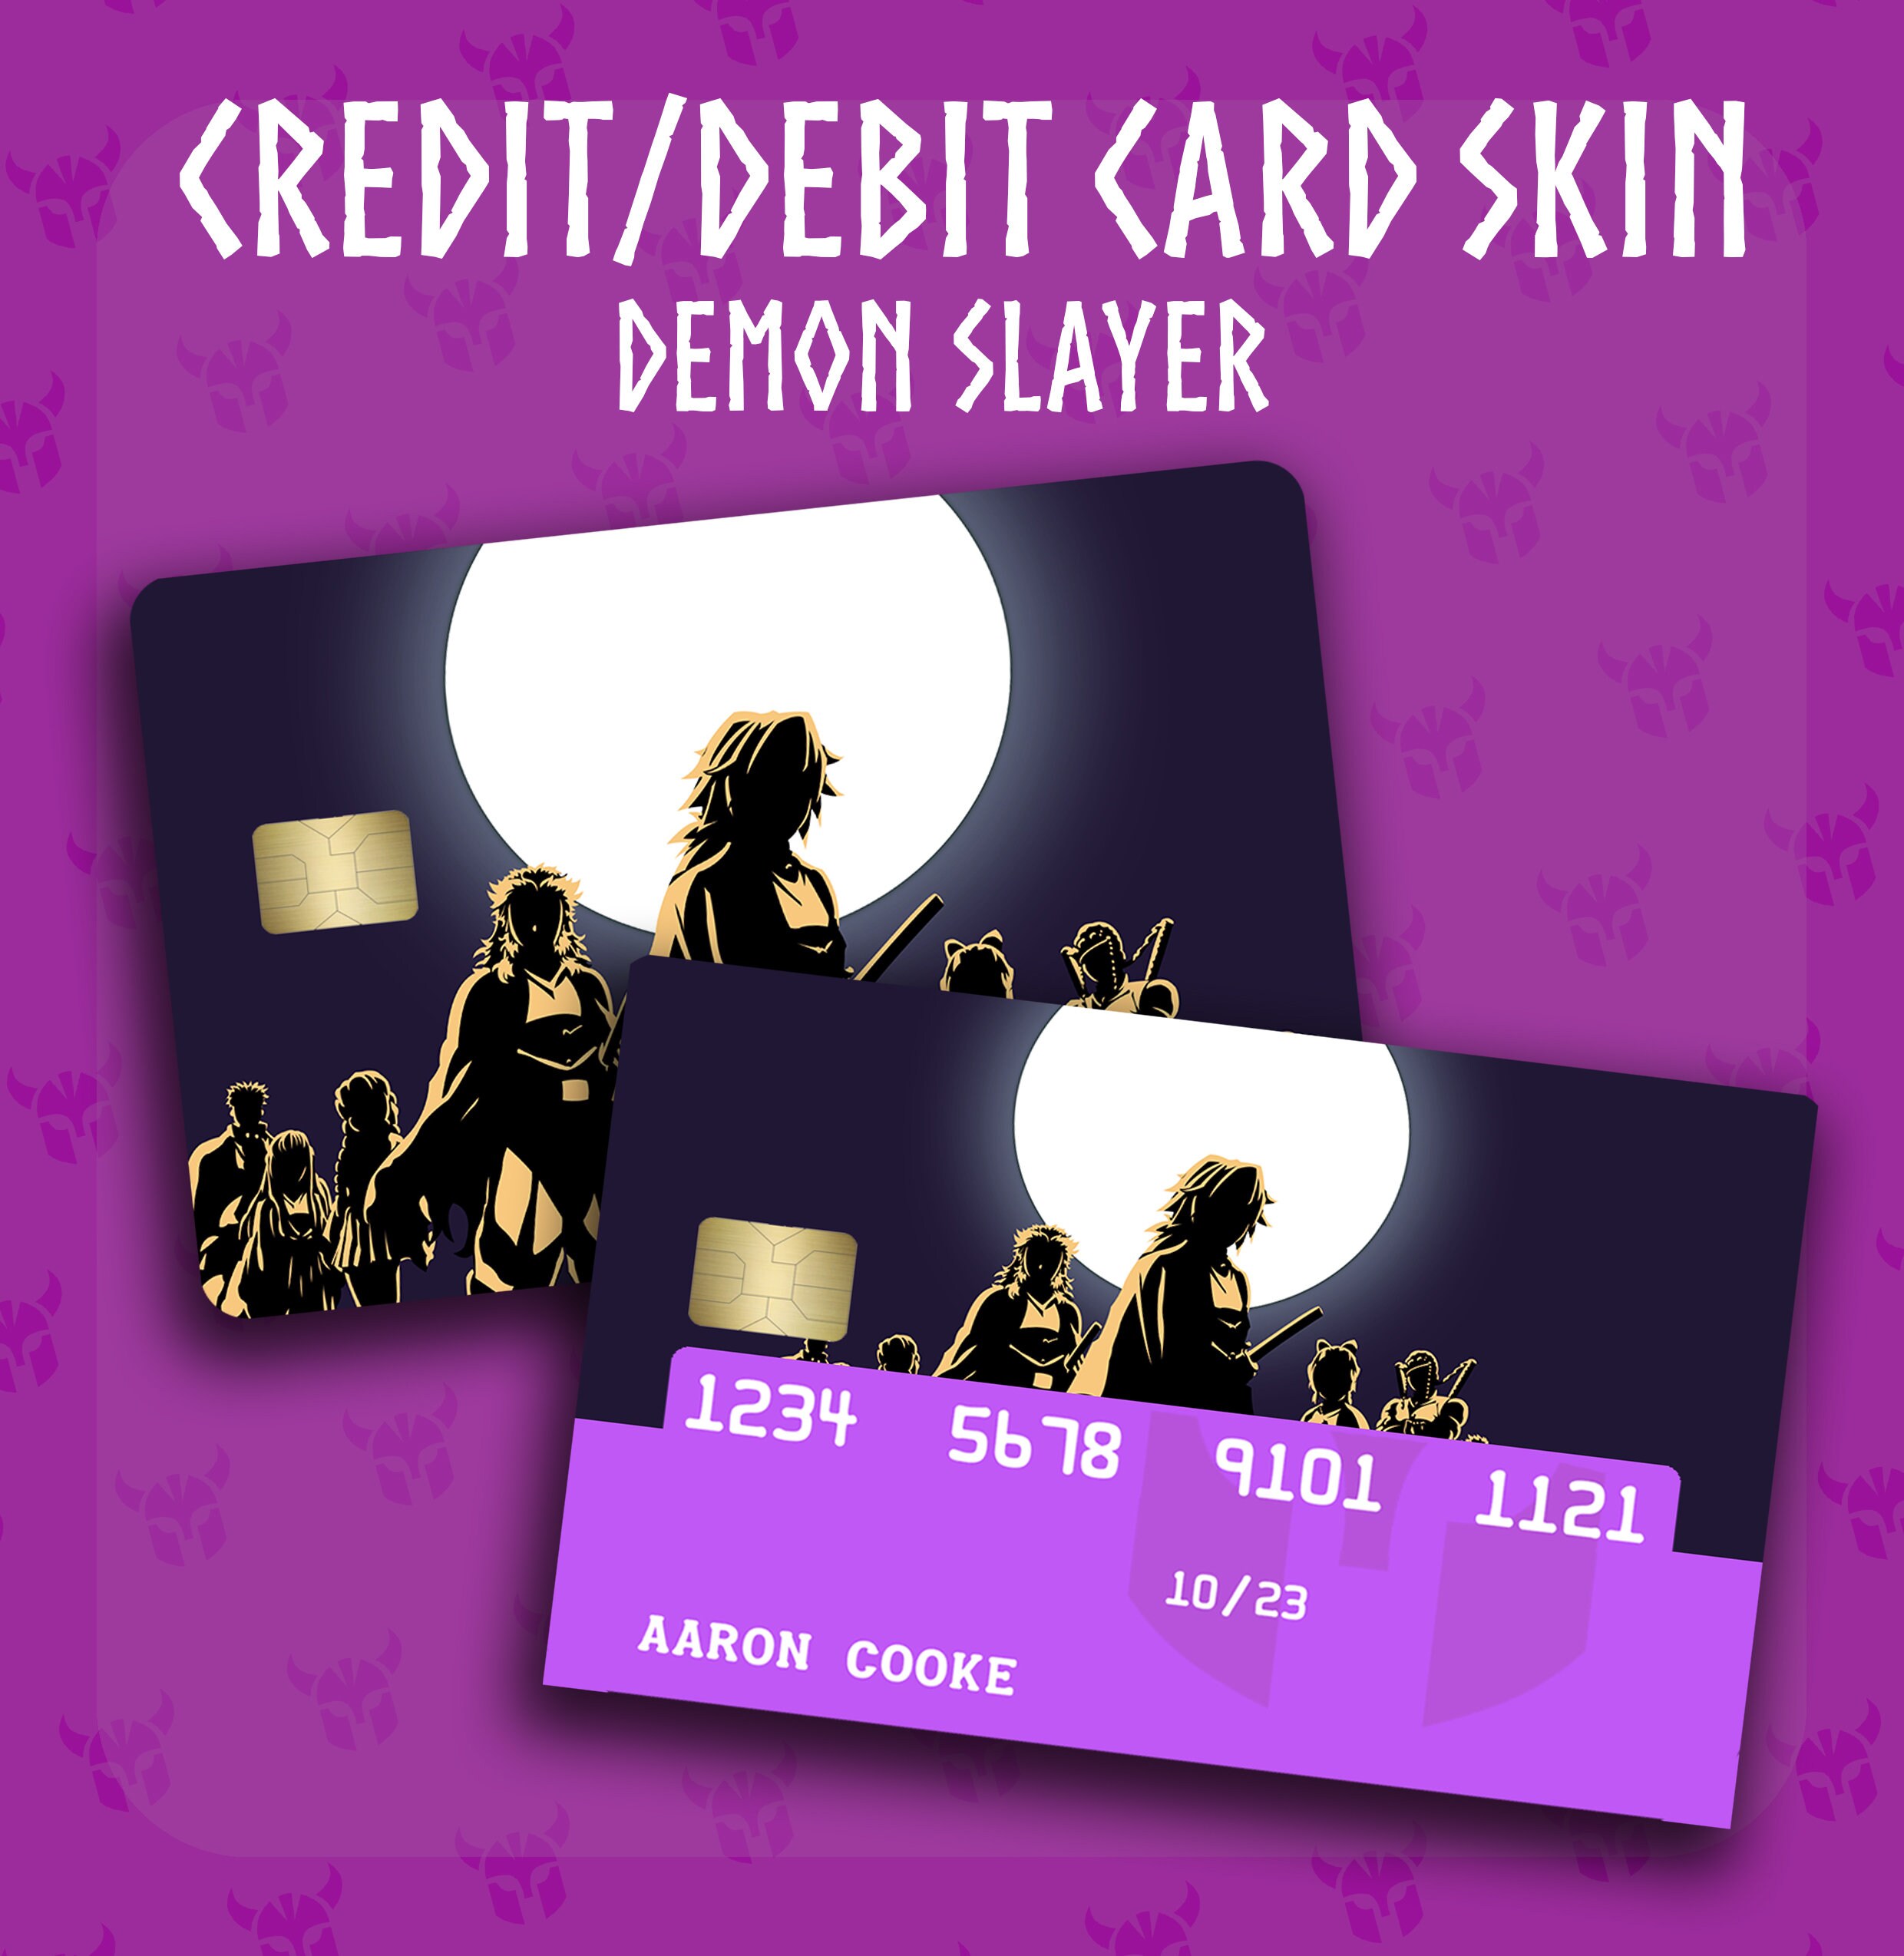 Credit card skin anime - .de